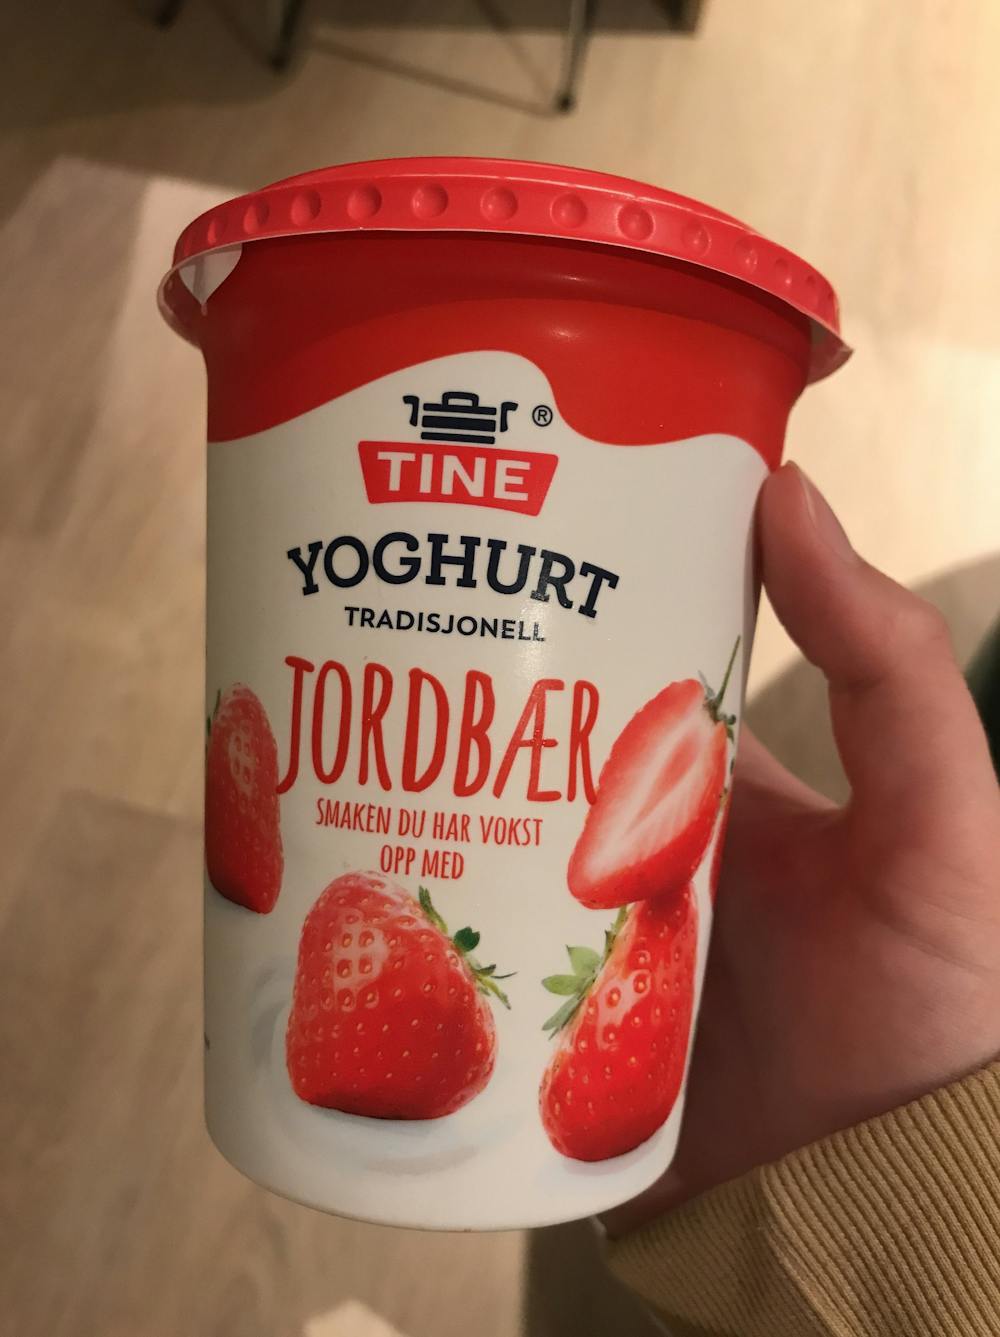 Tradisjonell yoghurt, jordbær, Tine